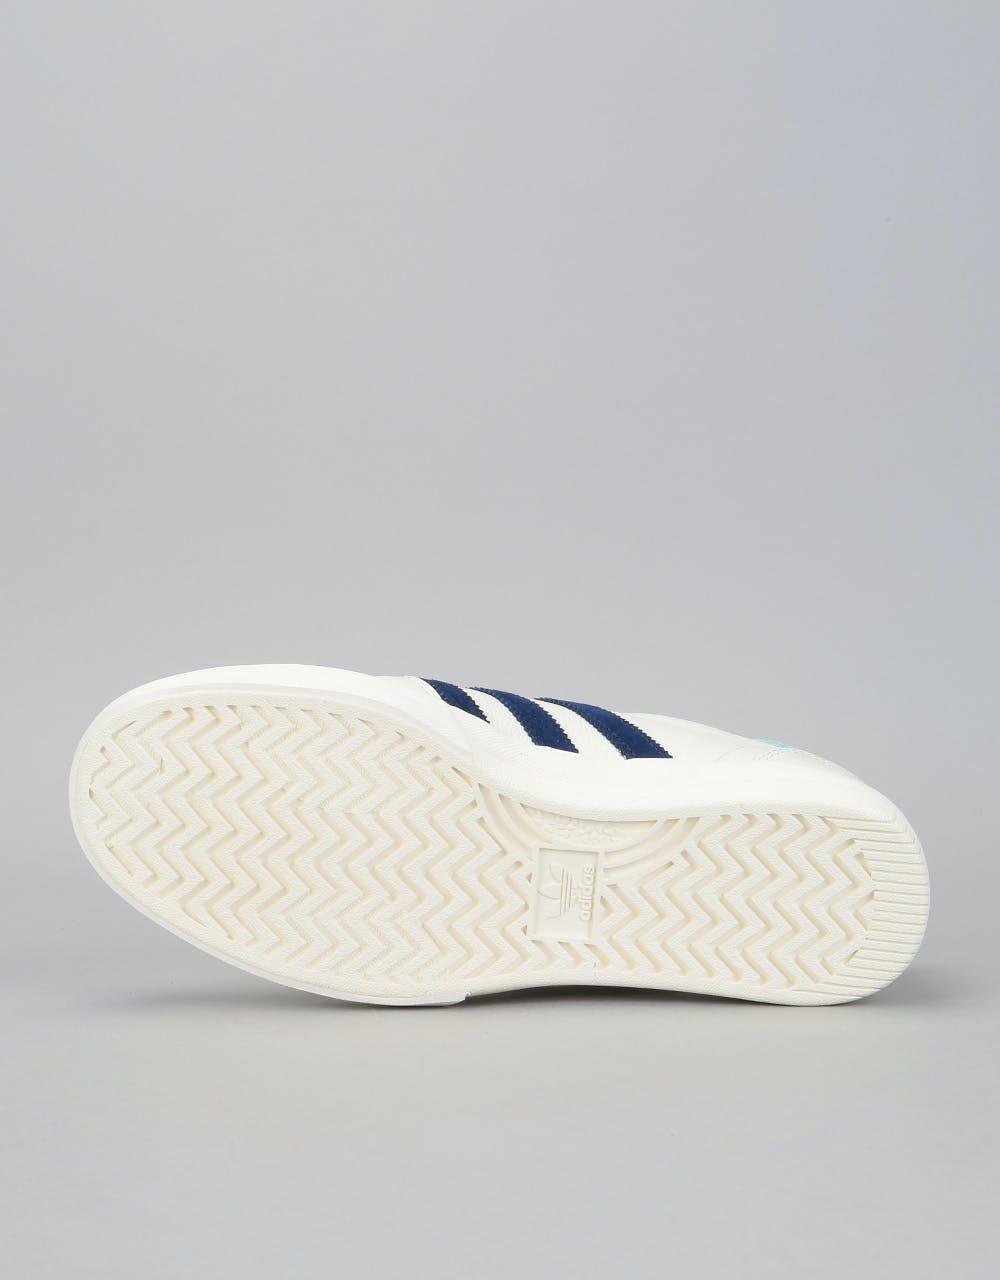 Adidas x Hélas Lucas Premiere Skate Shoes - Off White/Dark Blue/Aqua